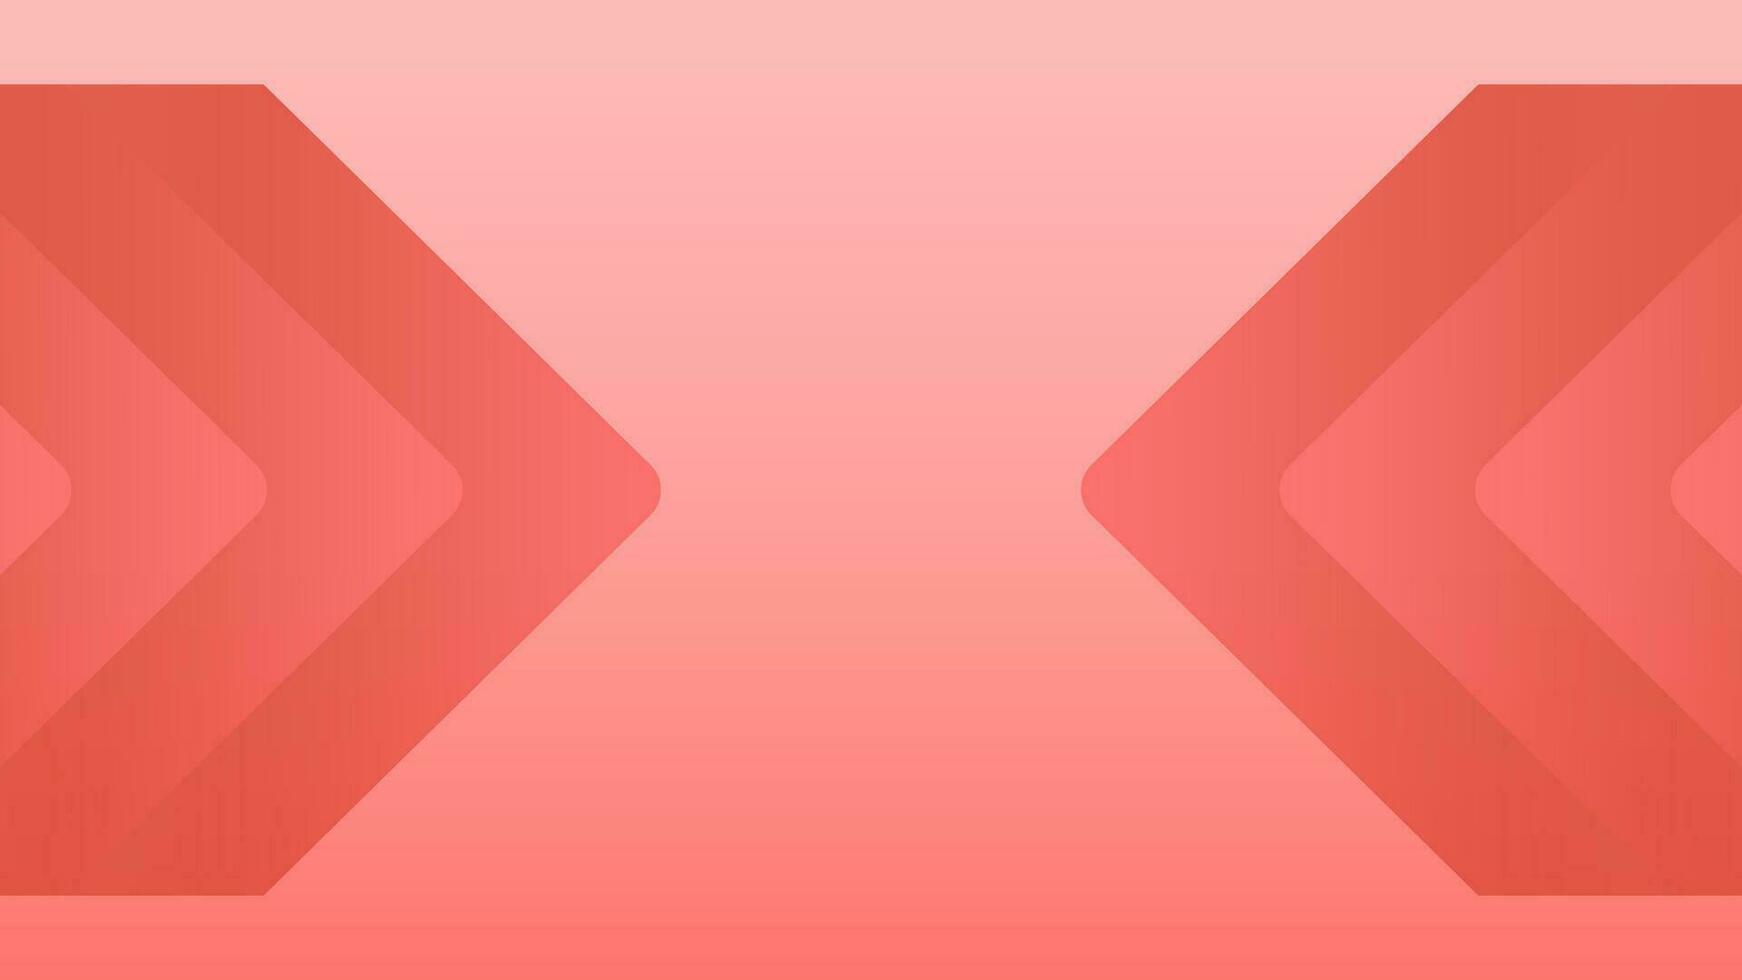 3D background design geometric dark light pink red triangle gradient color modern banner poster vector